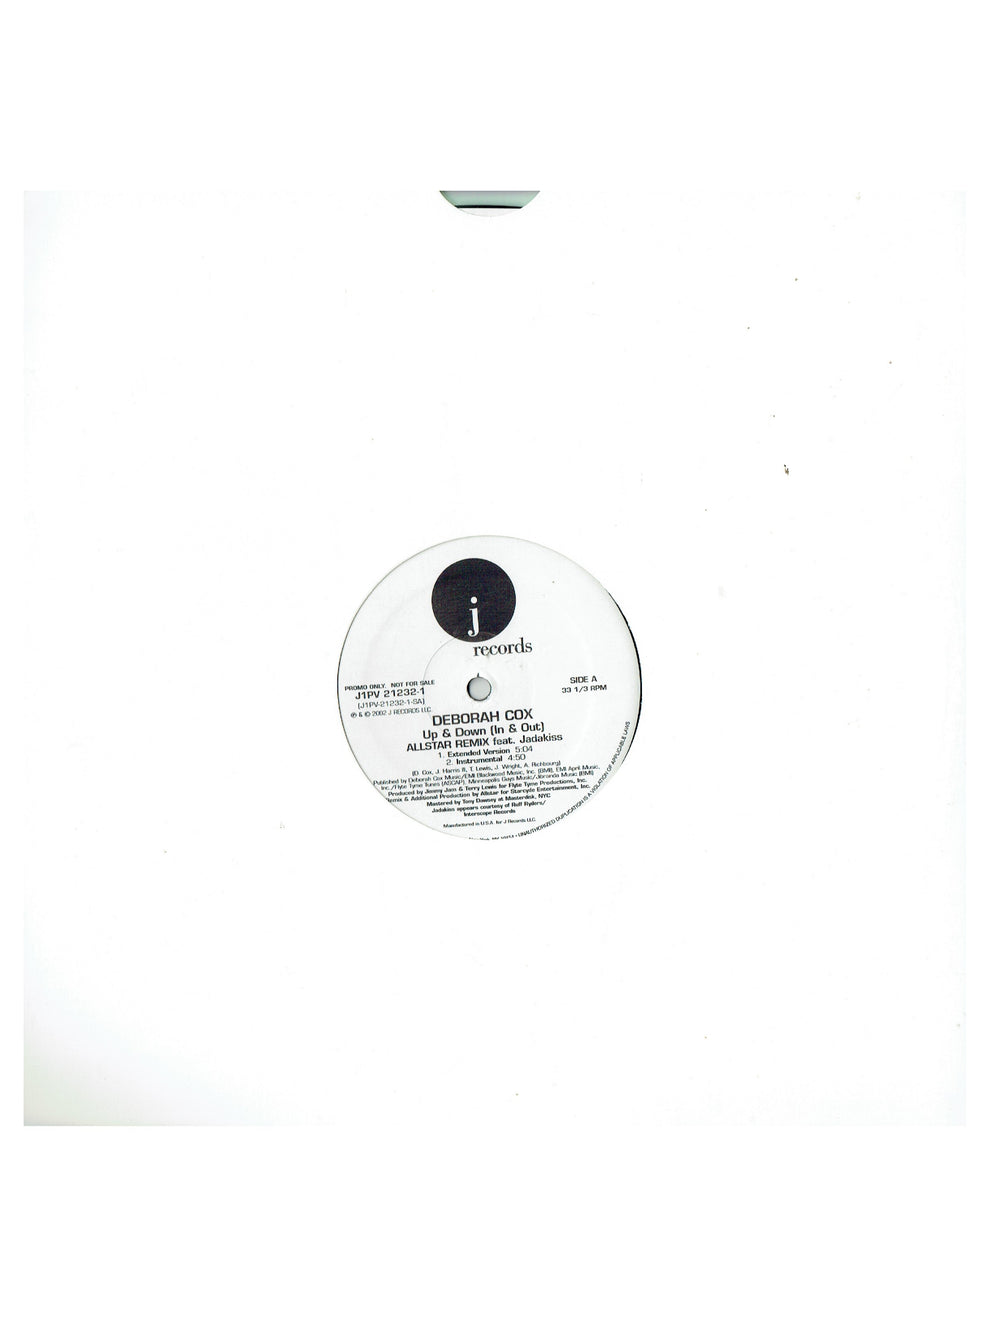 Prince – Deborah Cox Up & Down (In & Out)featuring Jadakiss Vinyl 12" Single Promo US Preloved: 2002